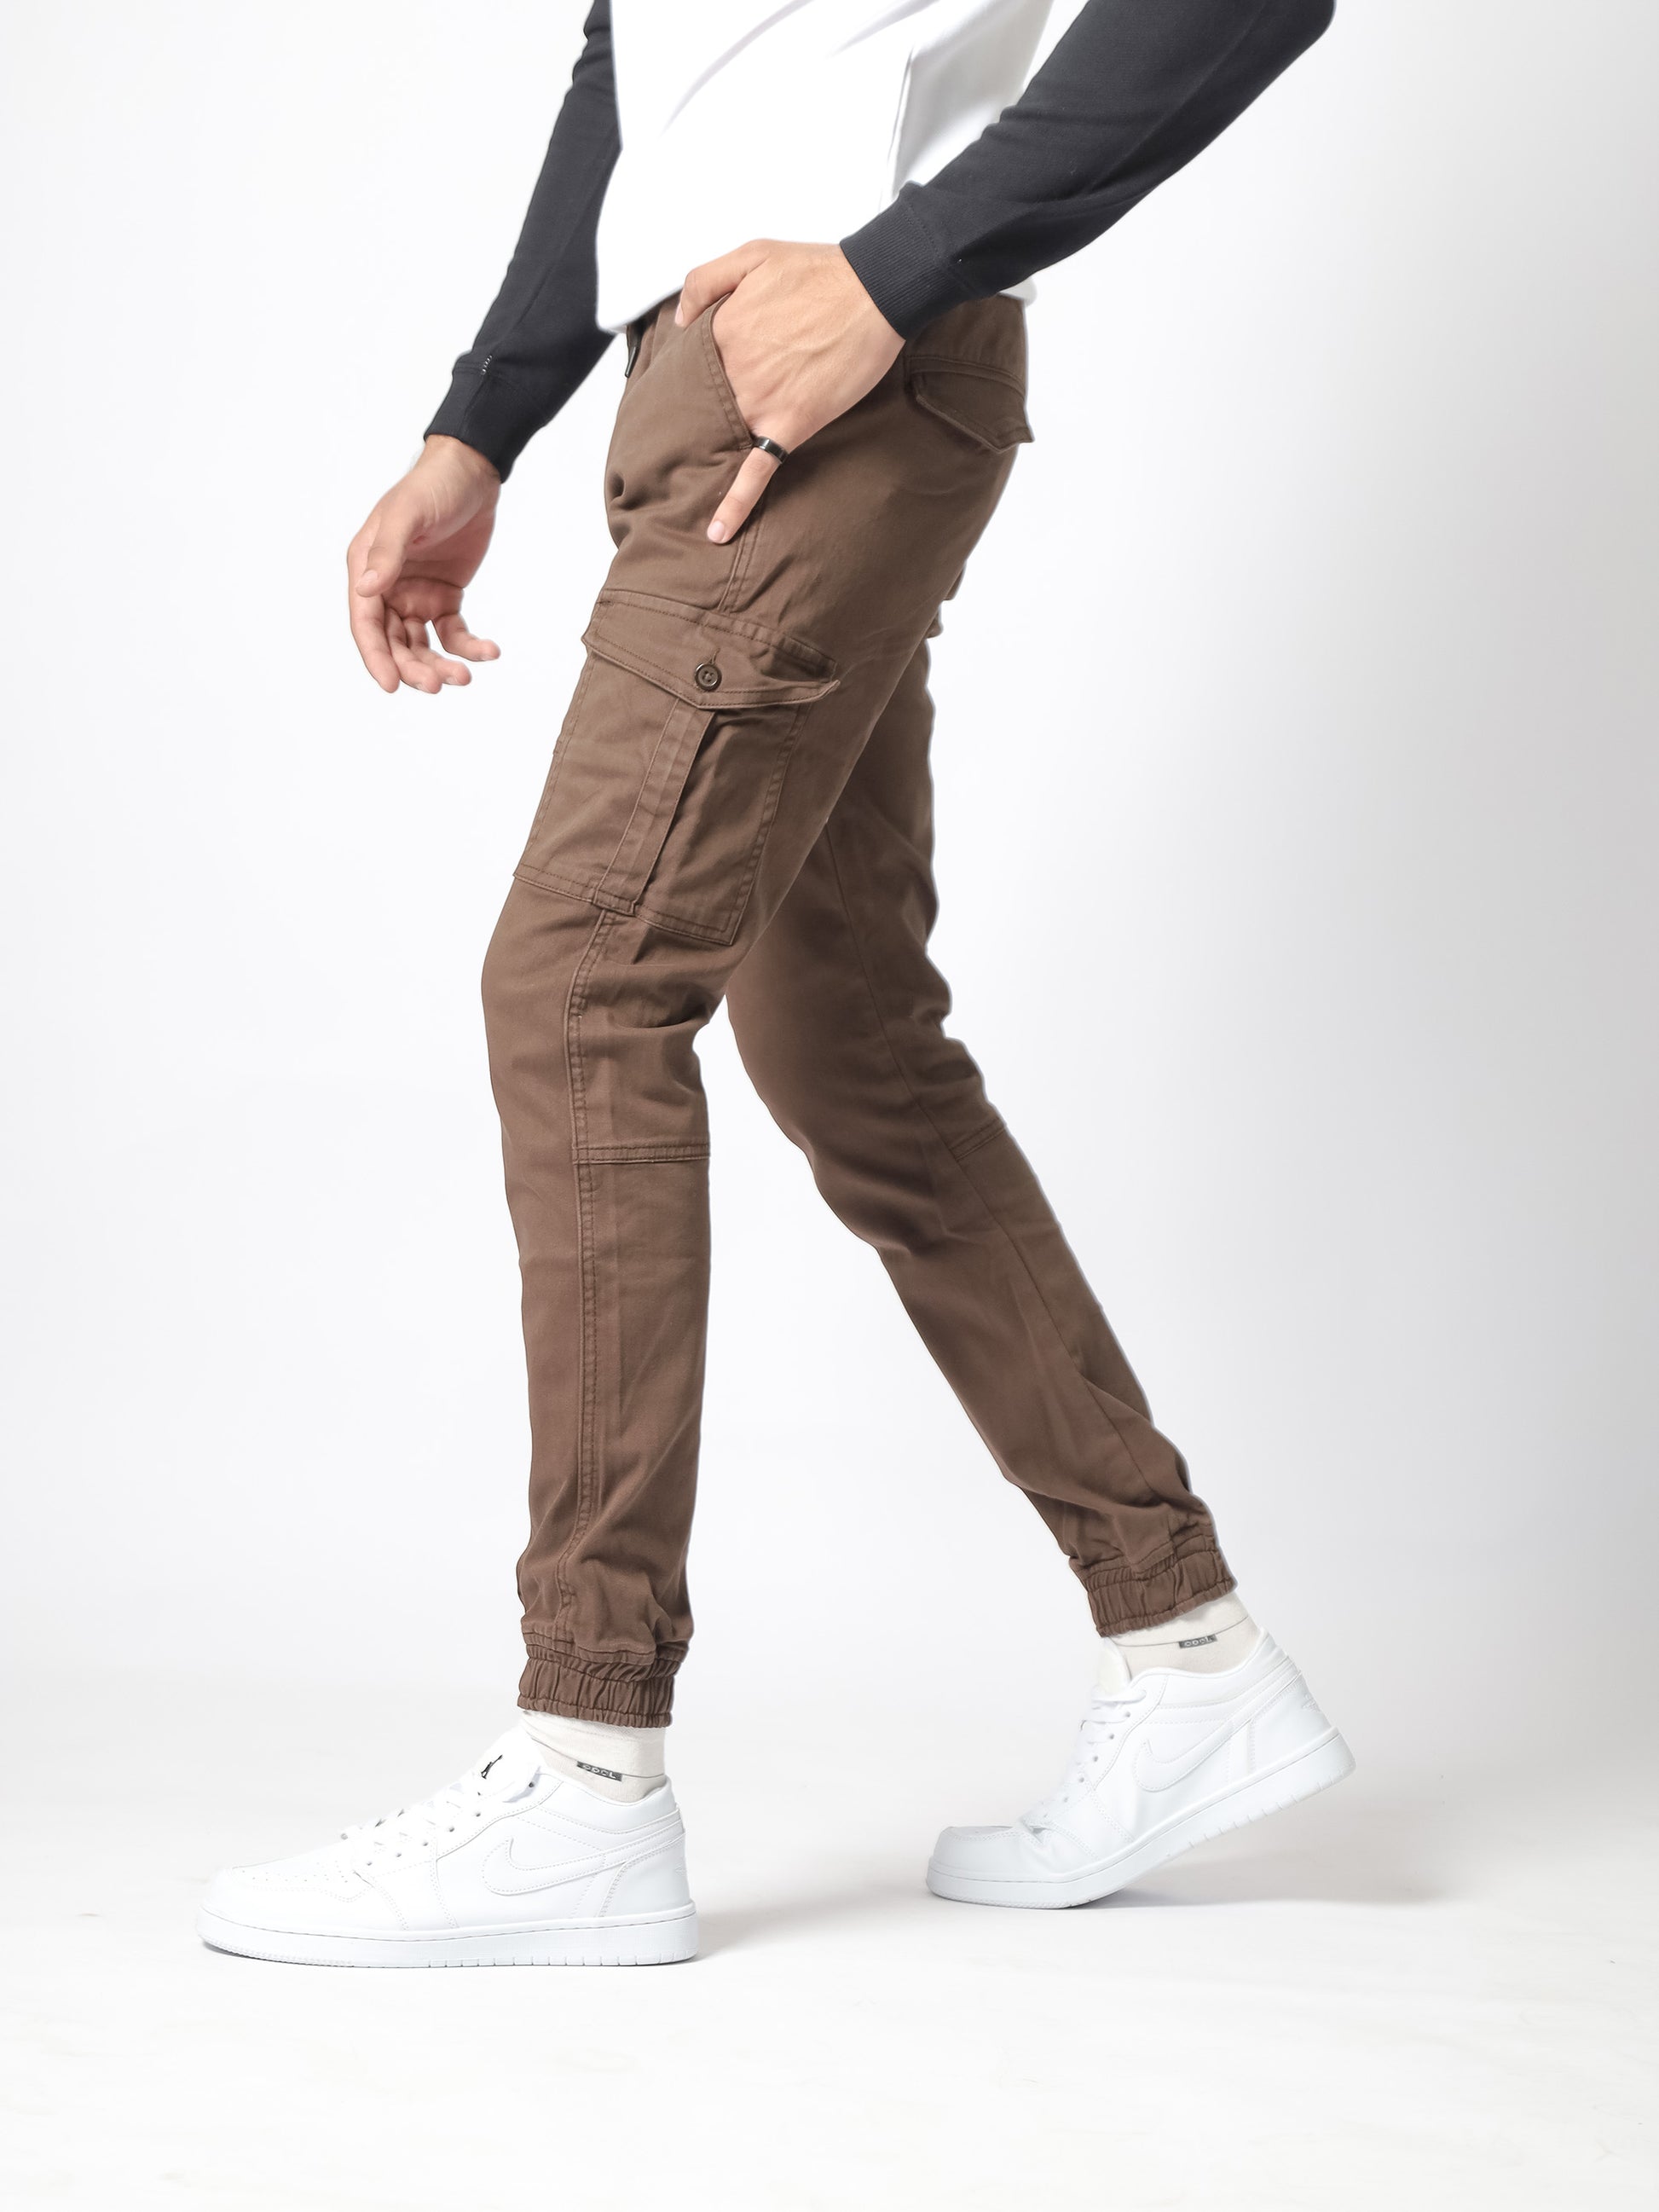 Light Brown Cargo Pants Combination